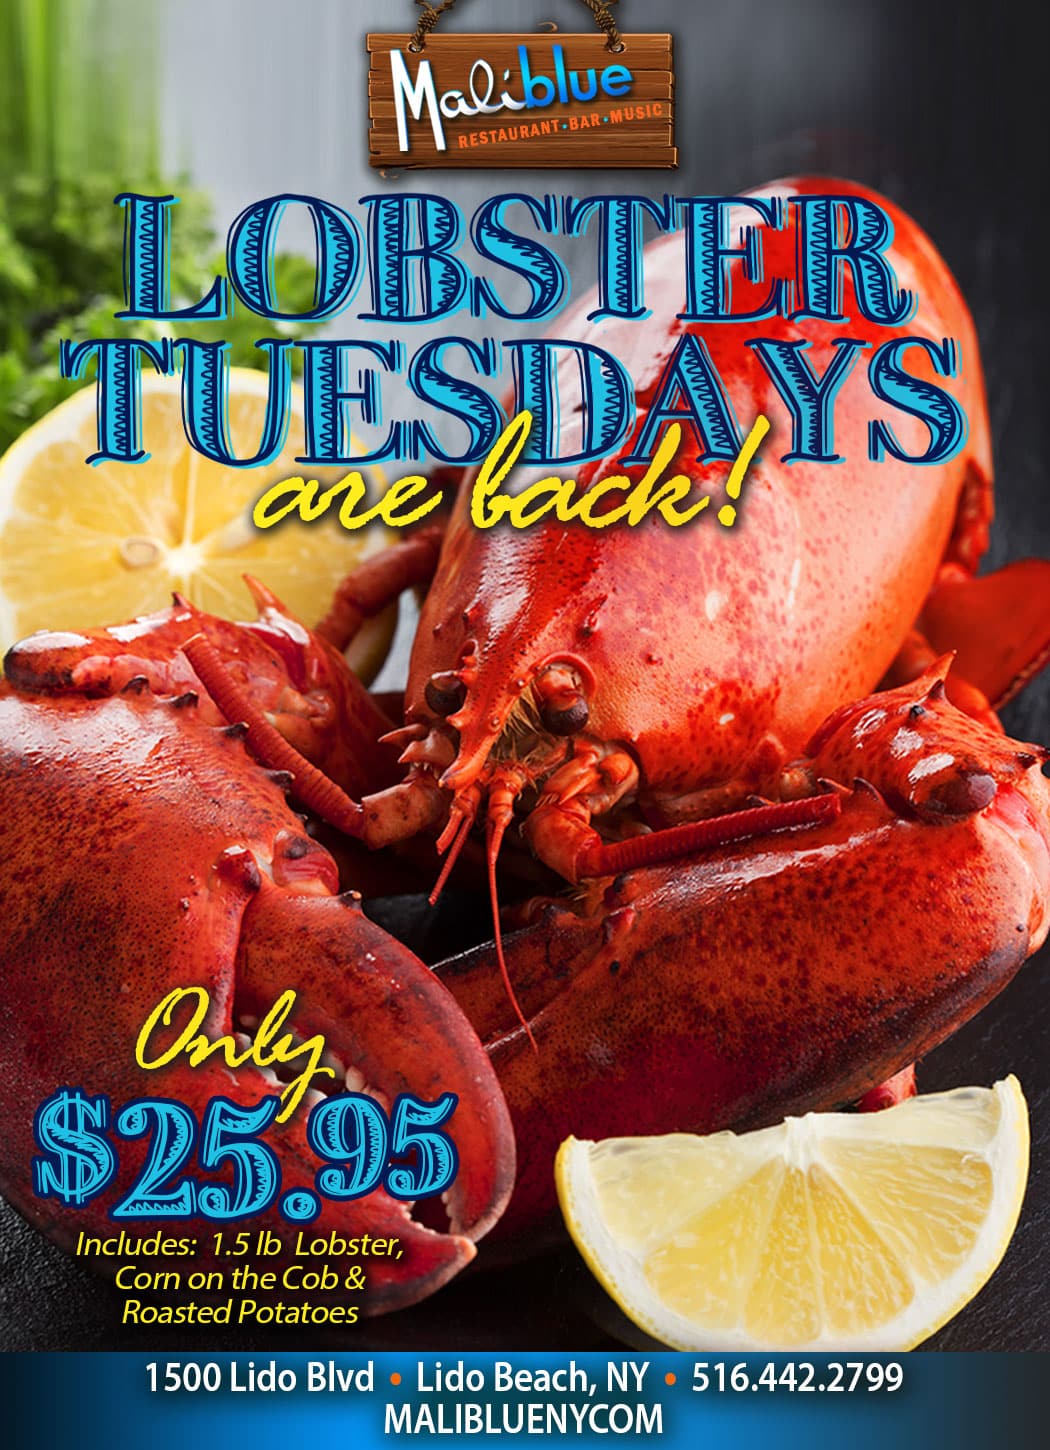 Maliblue Restaurant, Lobster Tuesdays